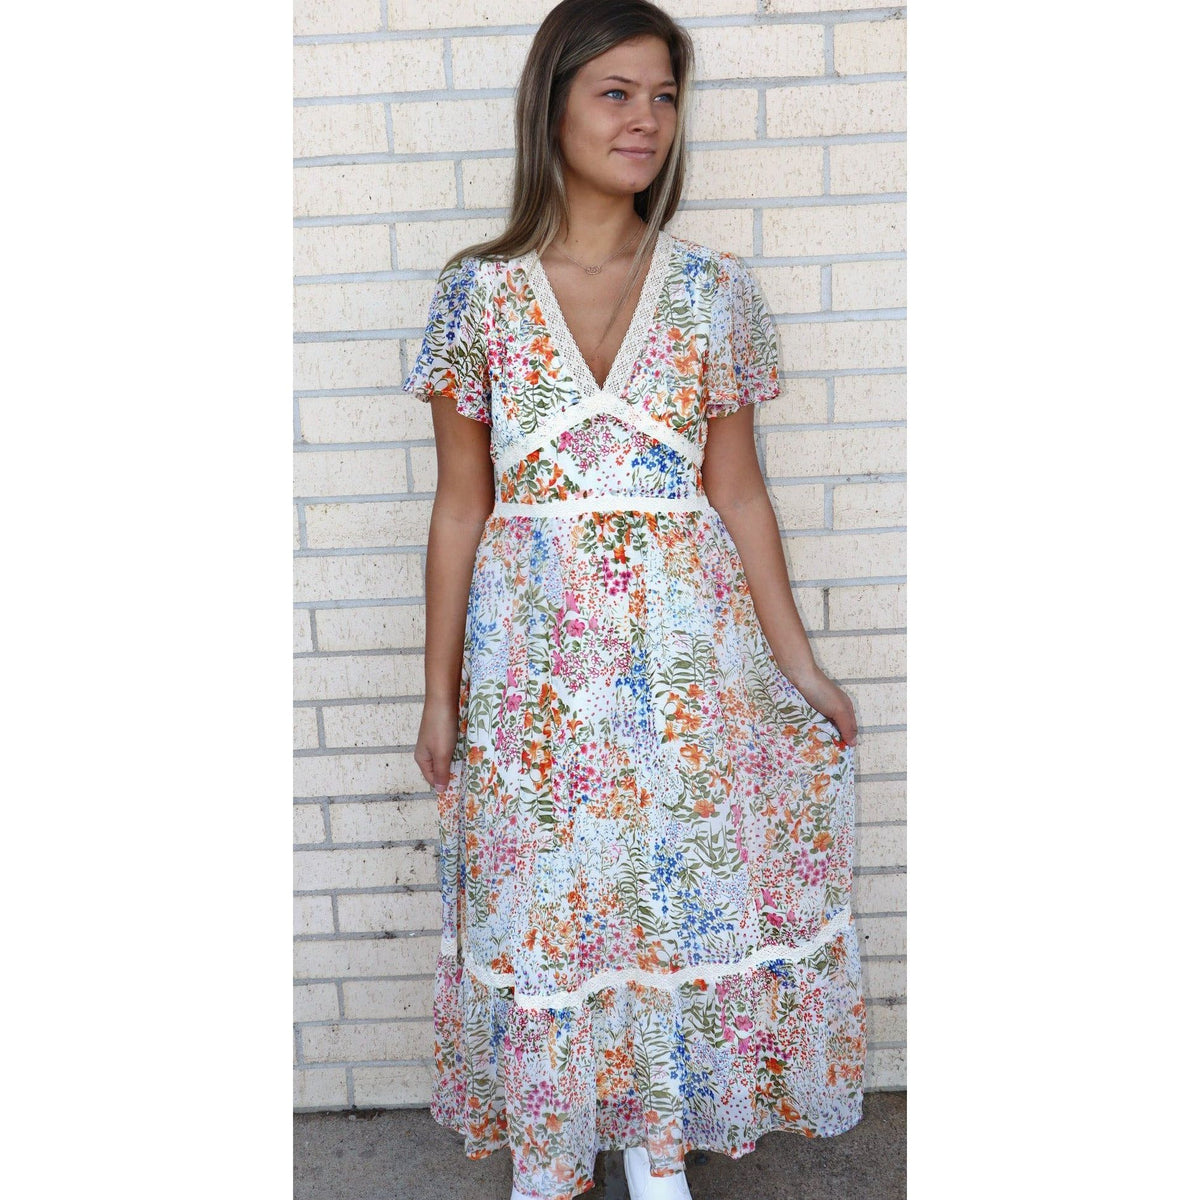 Rachel floral Midi Dress